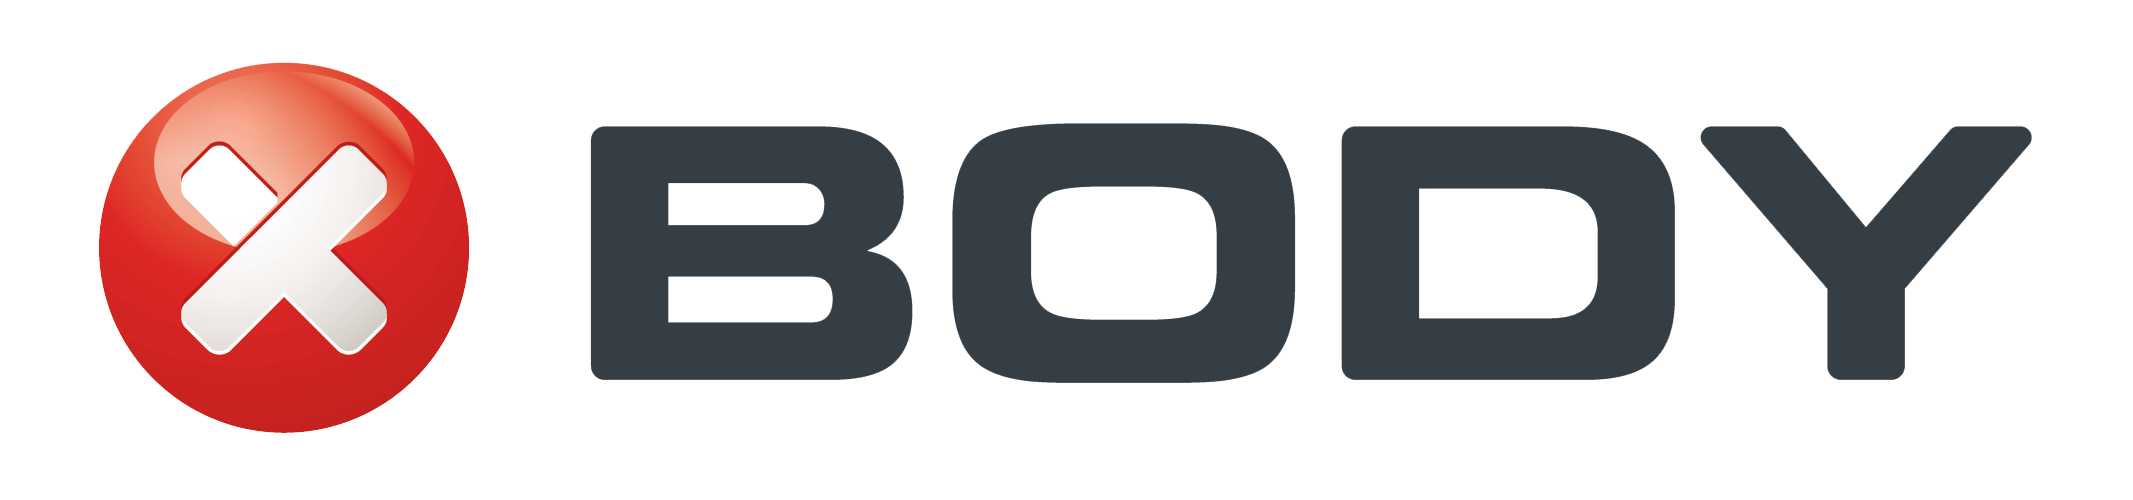 XBody-Logo-Full-CMYK-HR-transparent